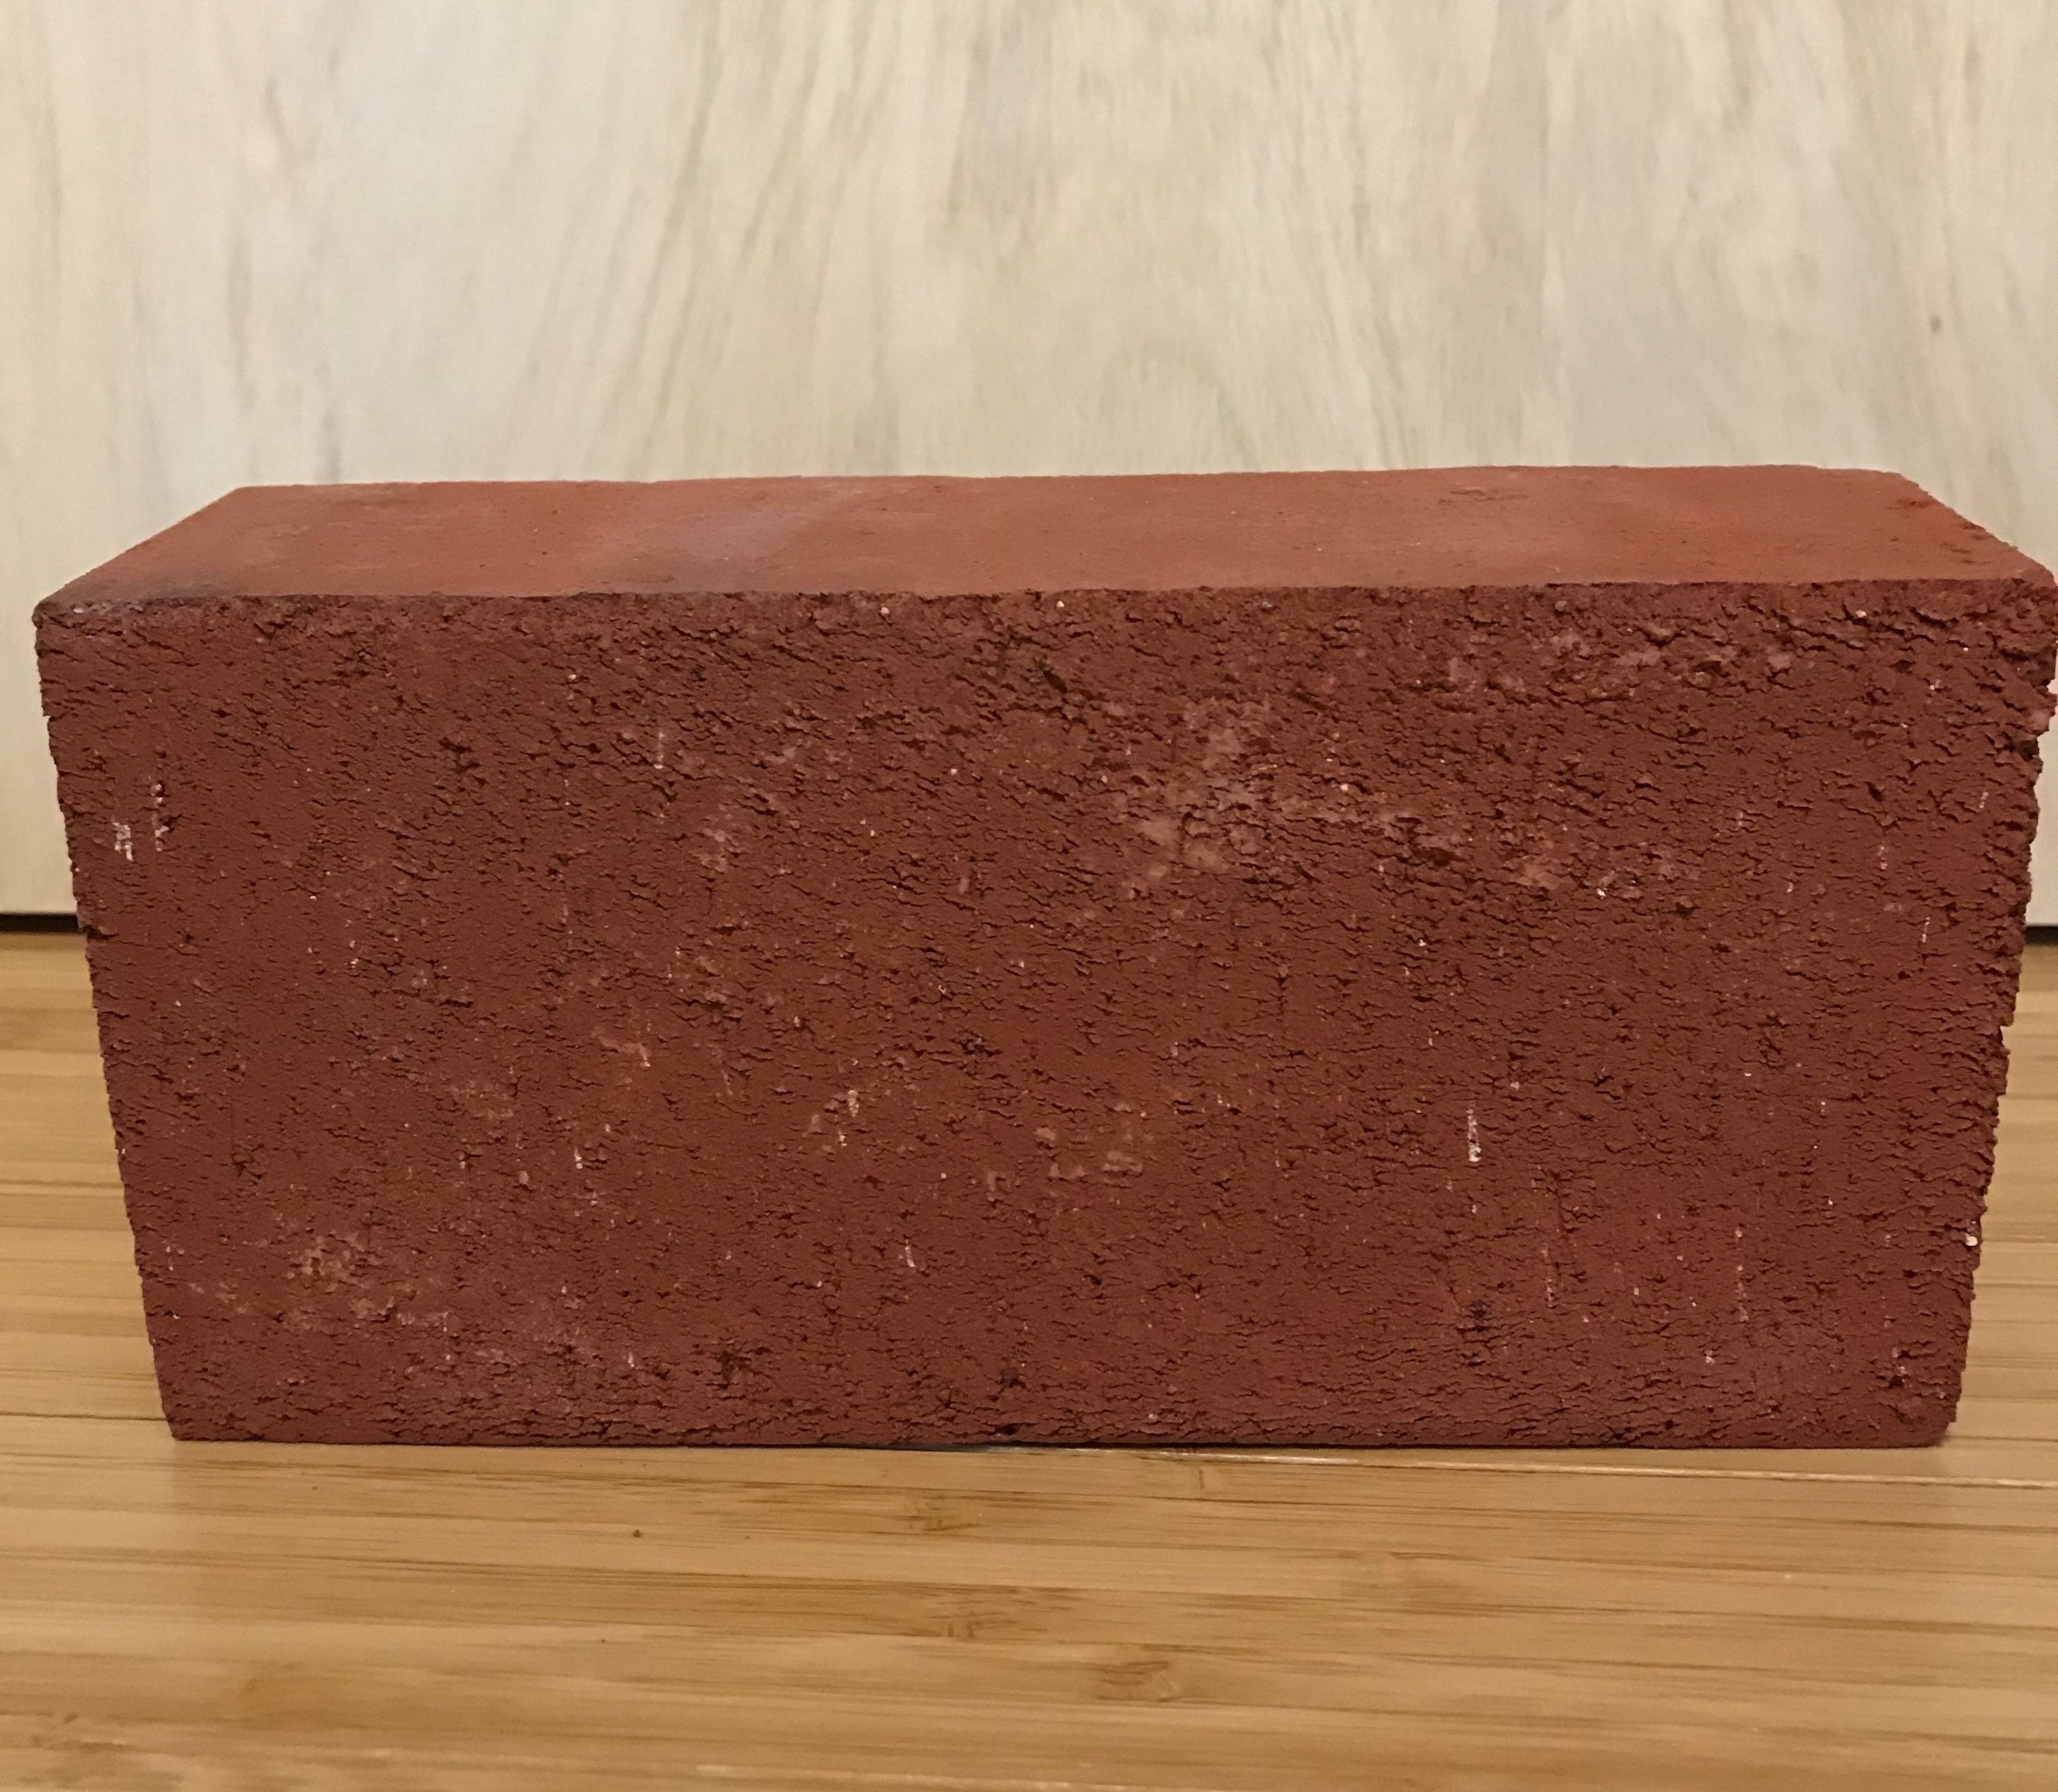 standard brick